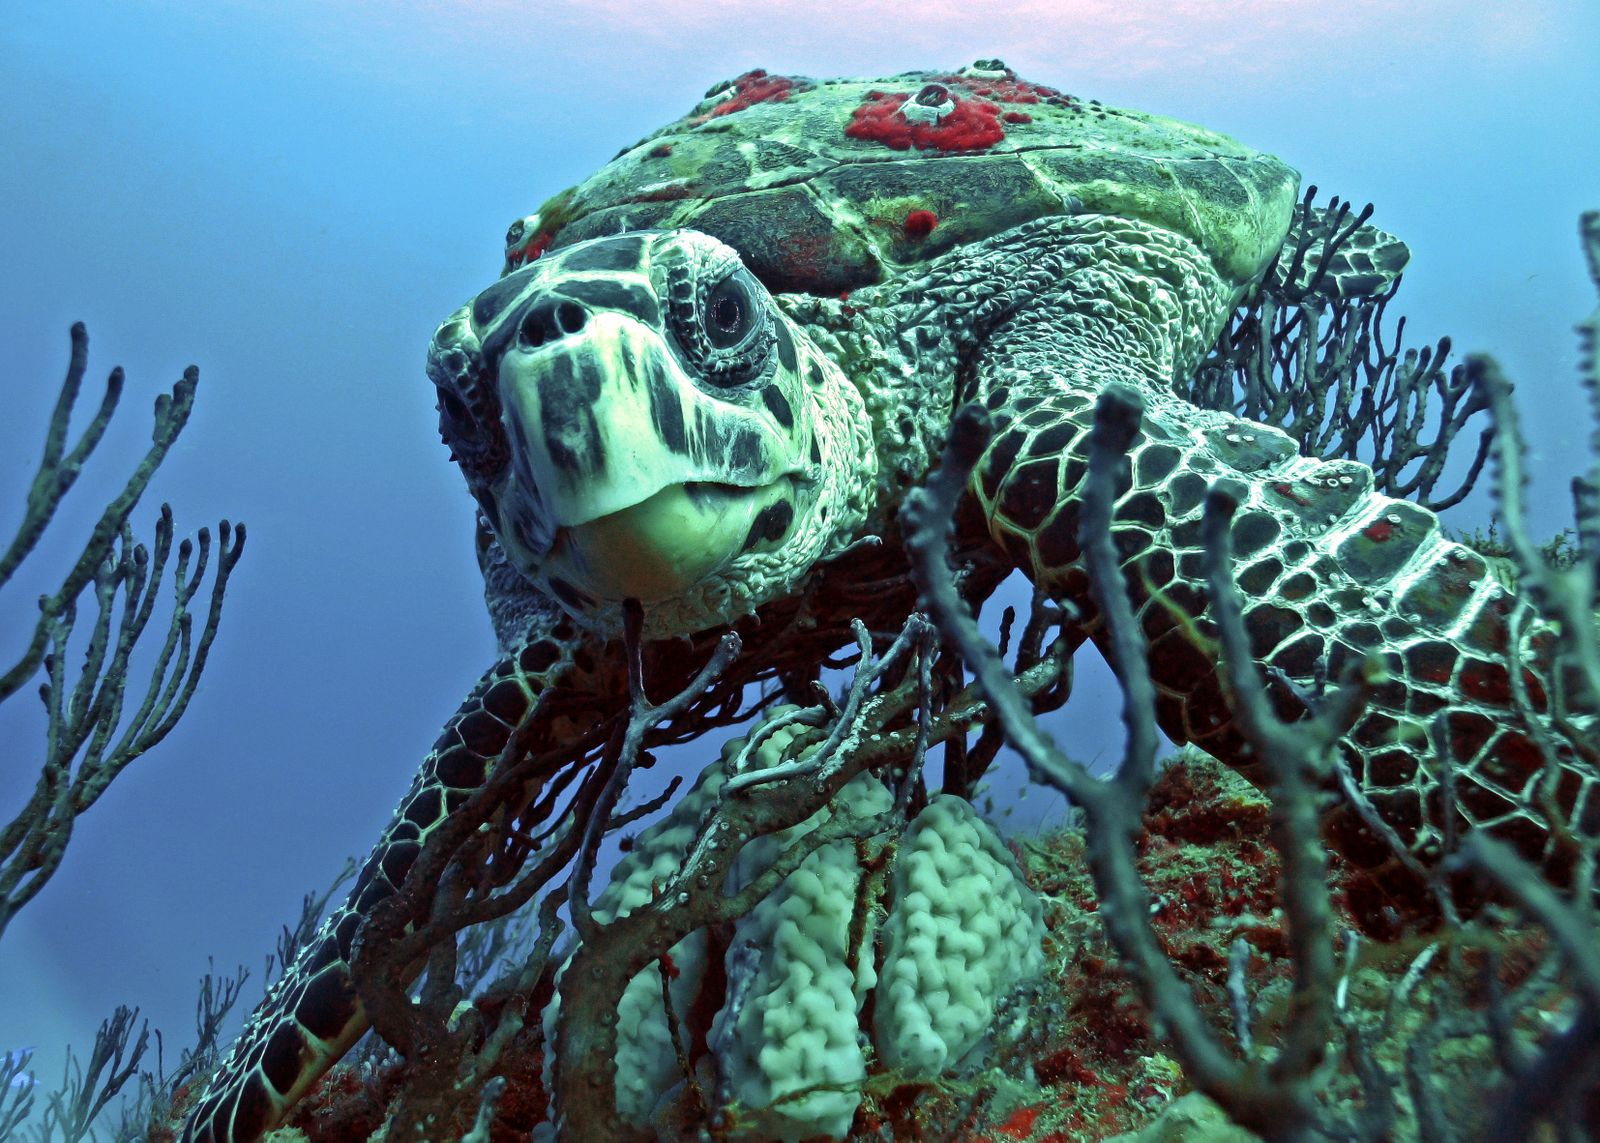 Journey Under the Sea With 15 Amazing Photos of Marine Life